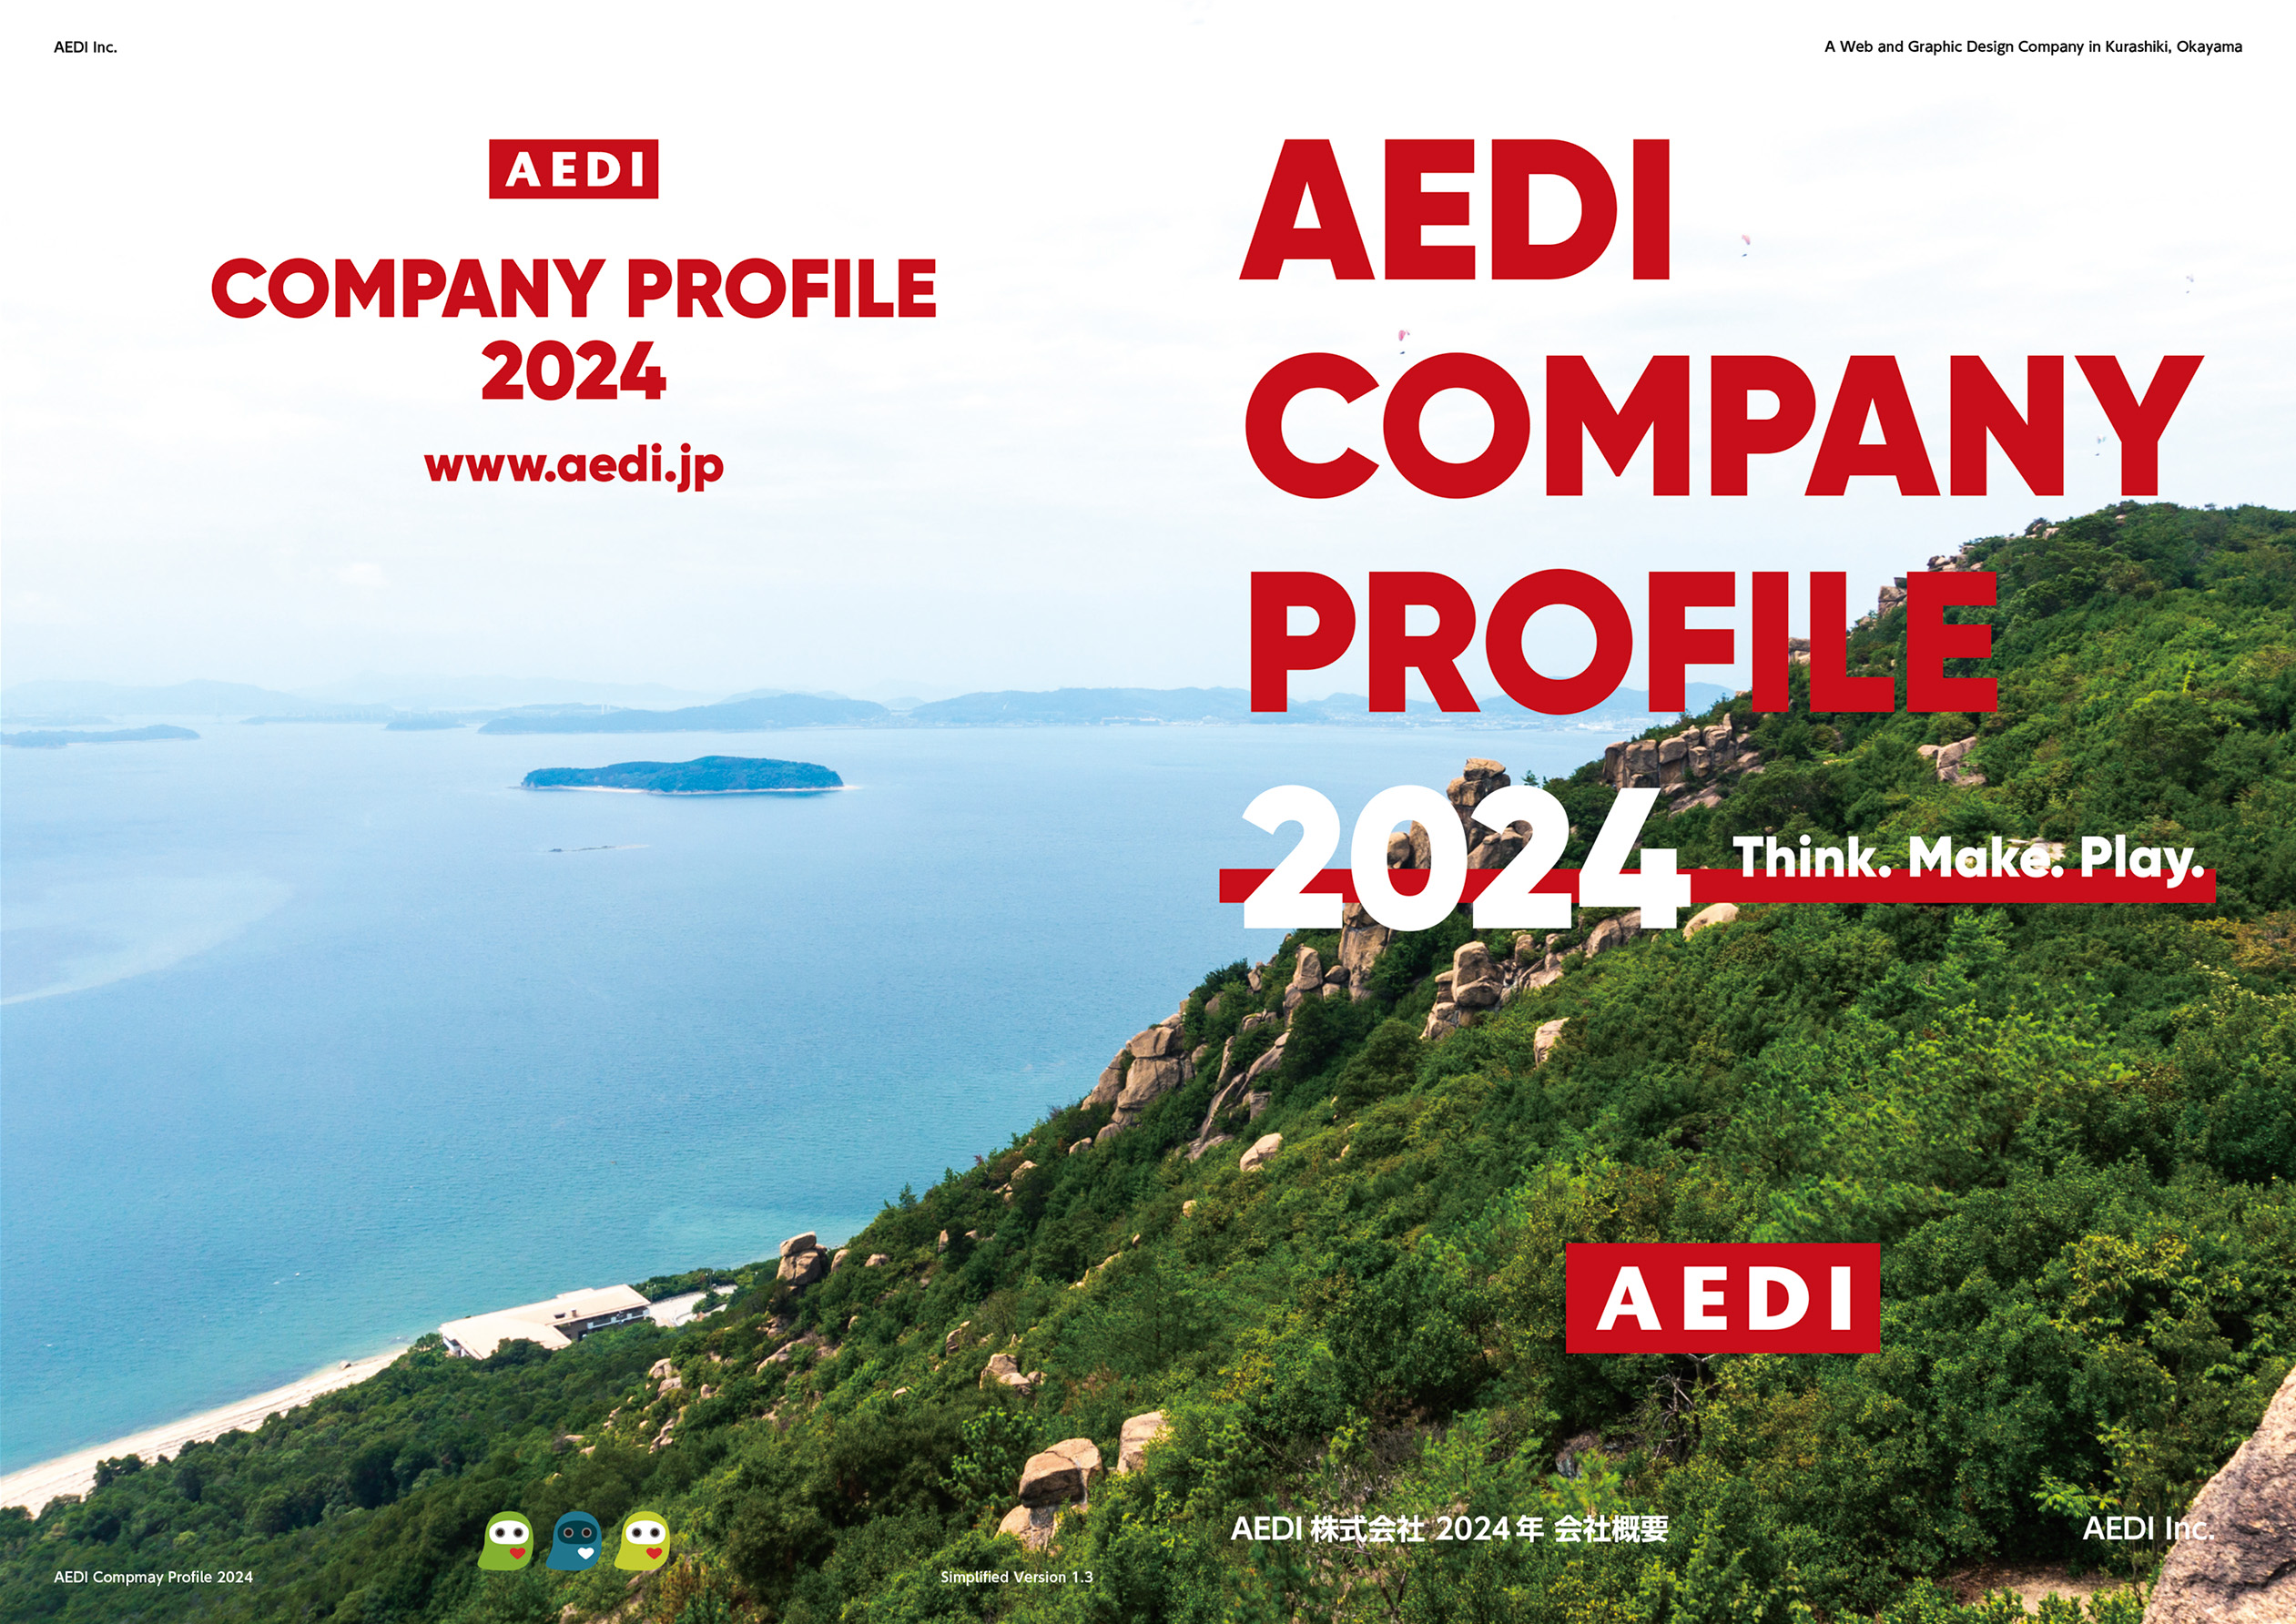 AEDI Inc. Company Profile 2024 Brochure - Simplified Version 1.3